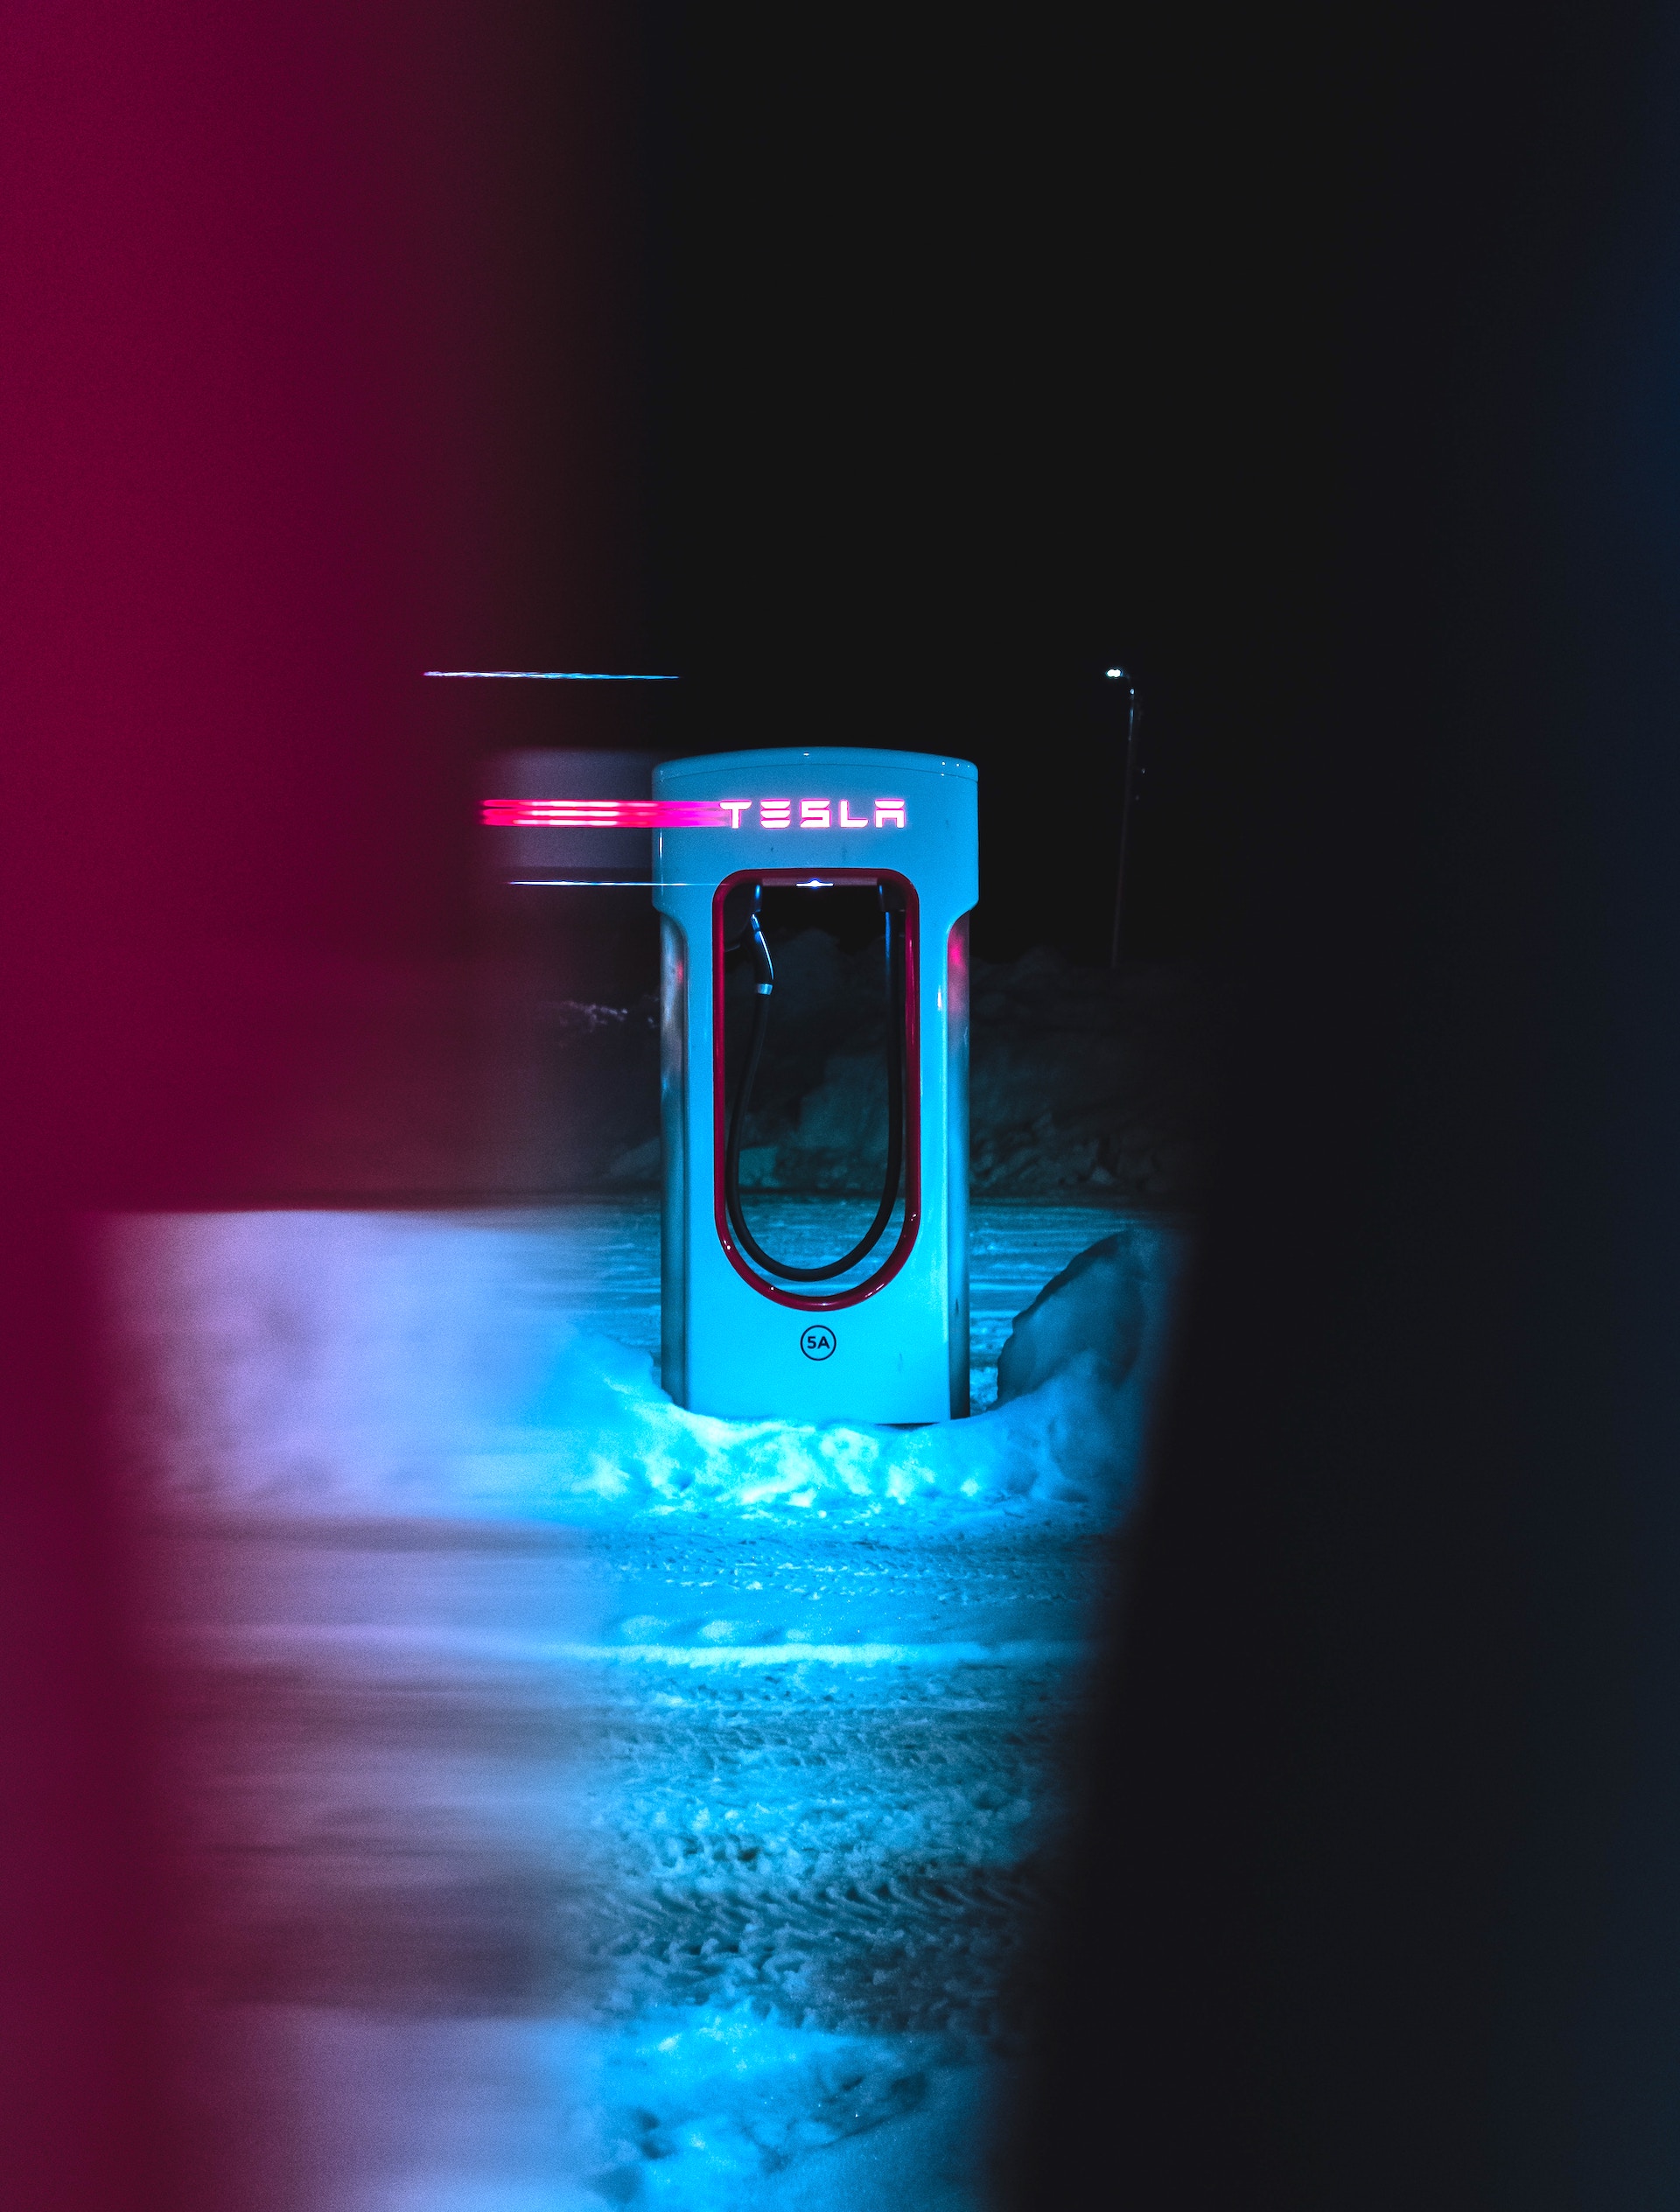 Photograph of a Tesla EV charging station